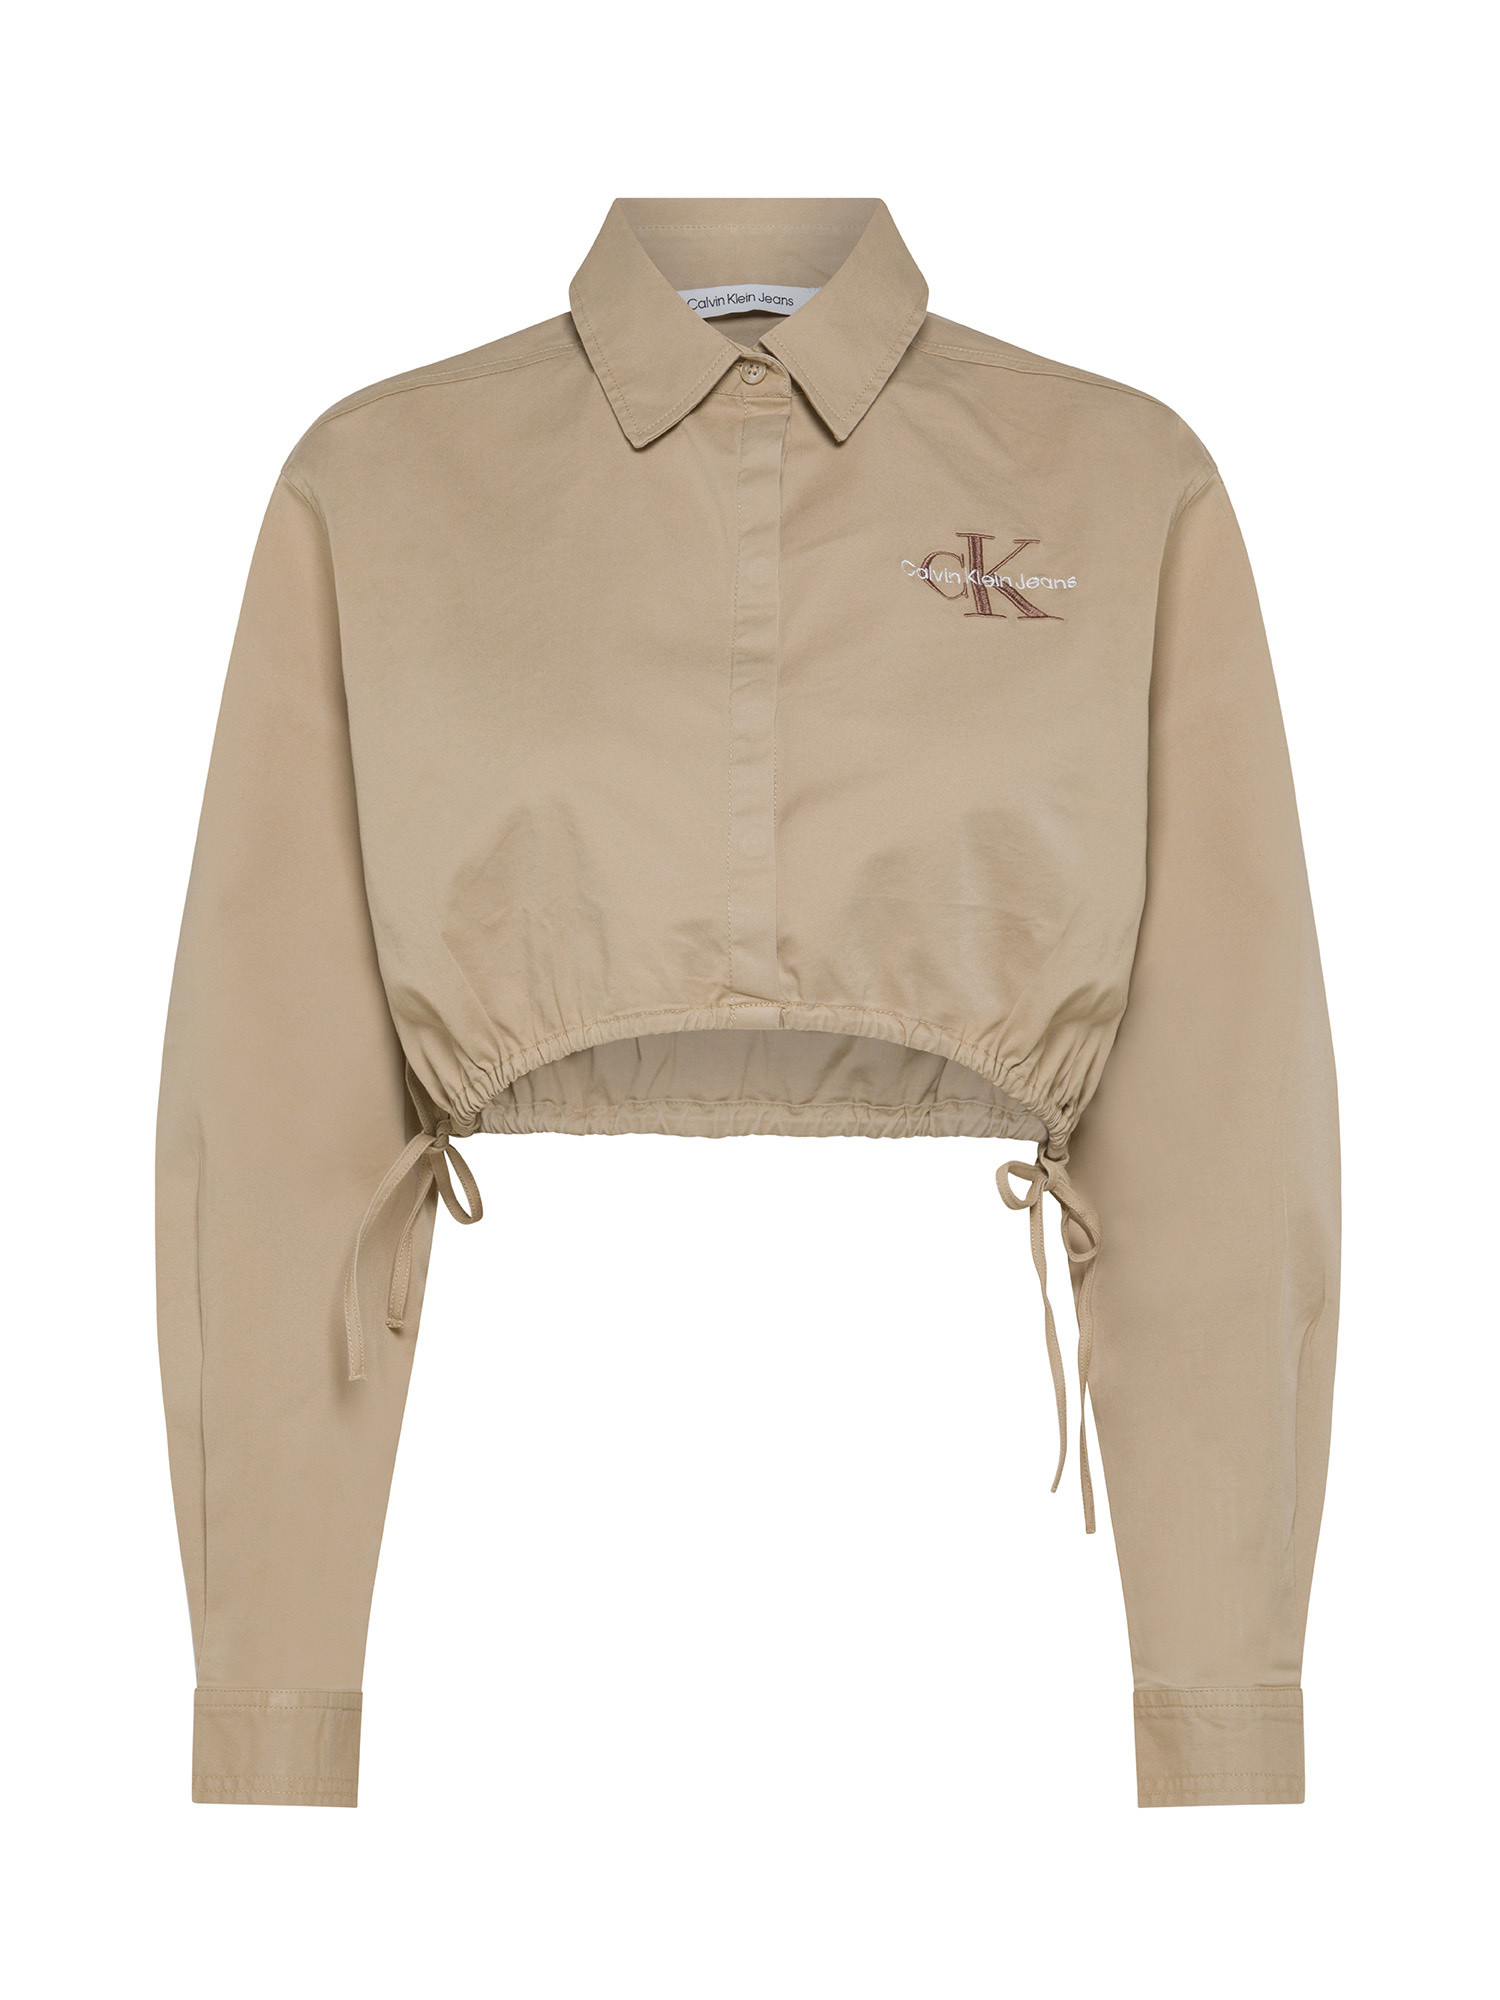 Calvin Klein Jeans - Camicia crop con logo, Beige, large image number 0